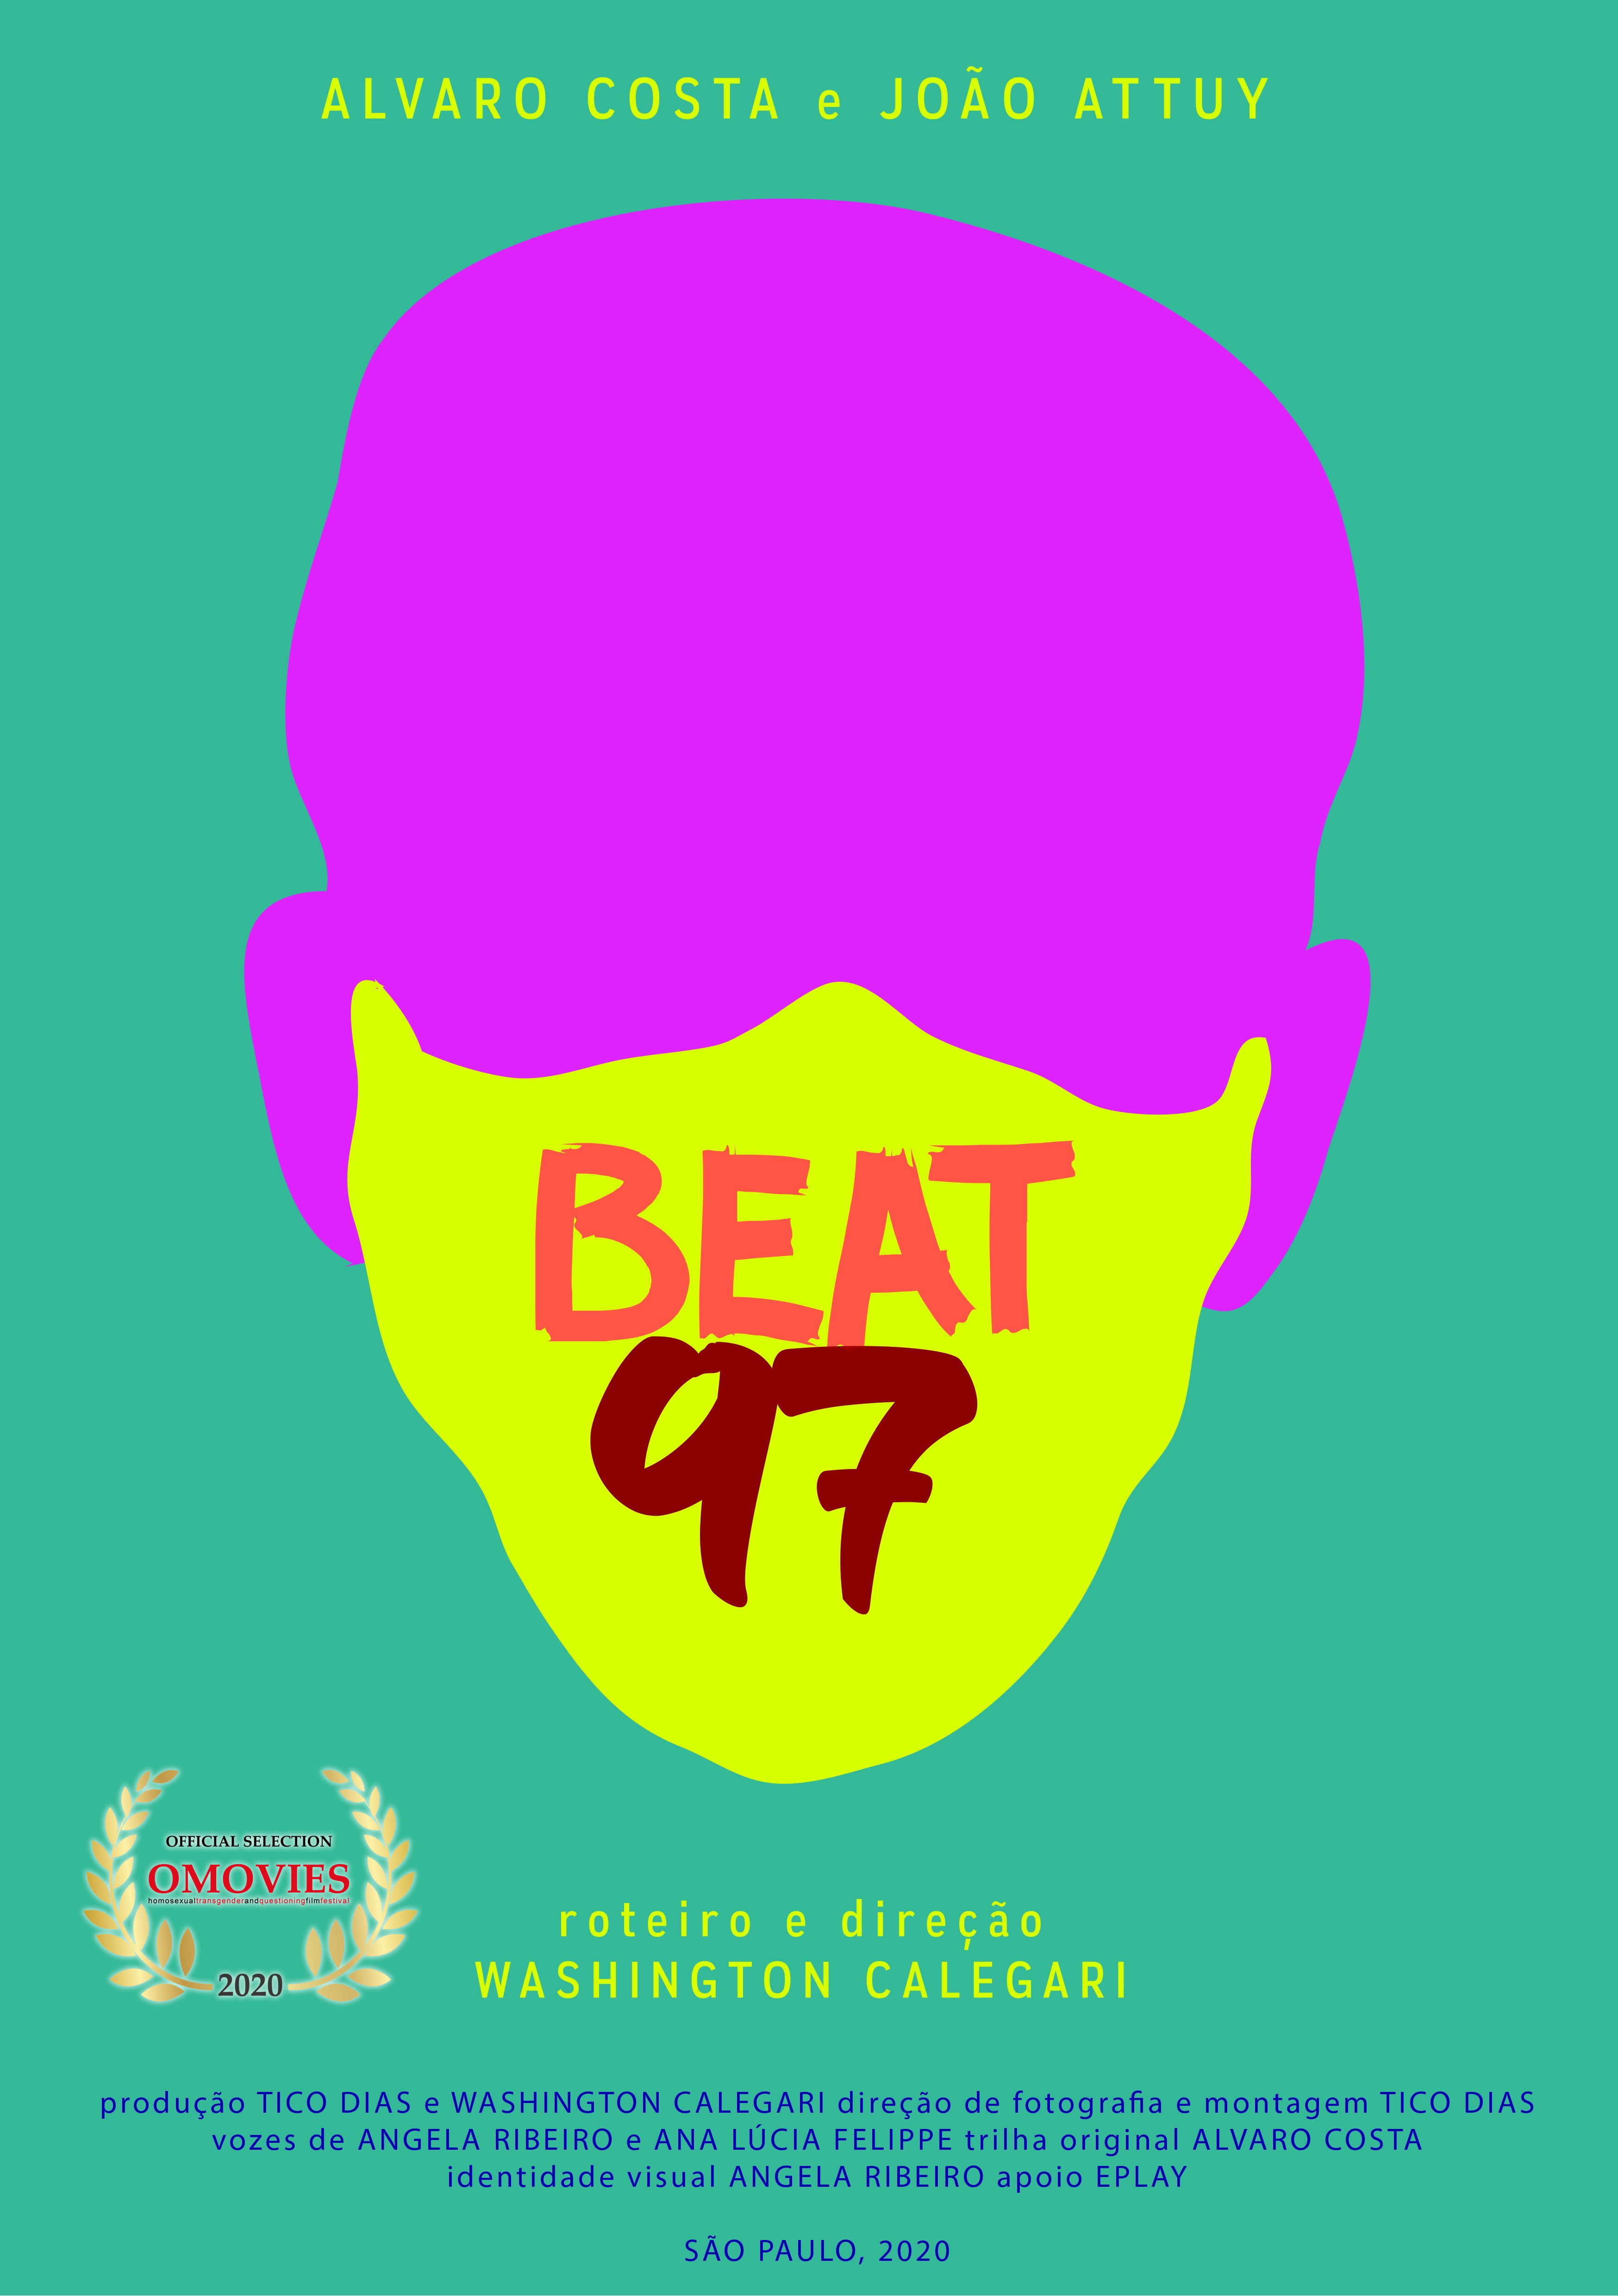 Beat 97 – Director  Washington Calegari Dec 22